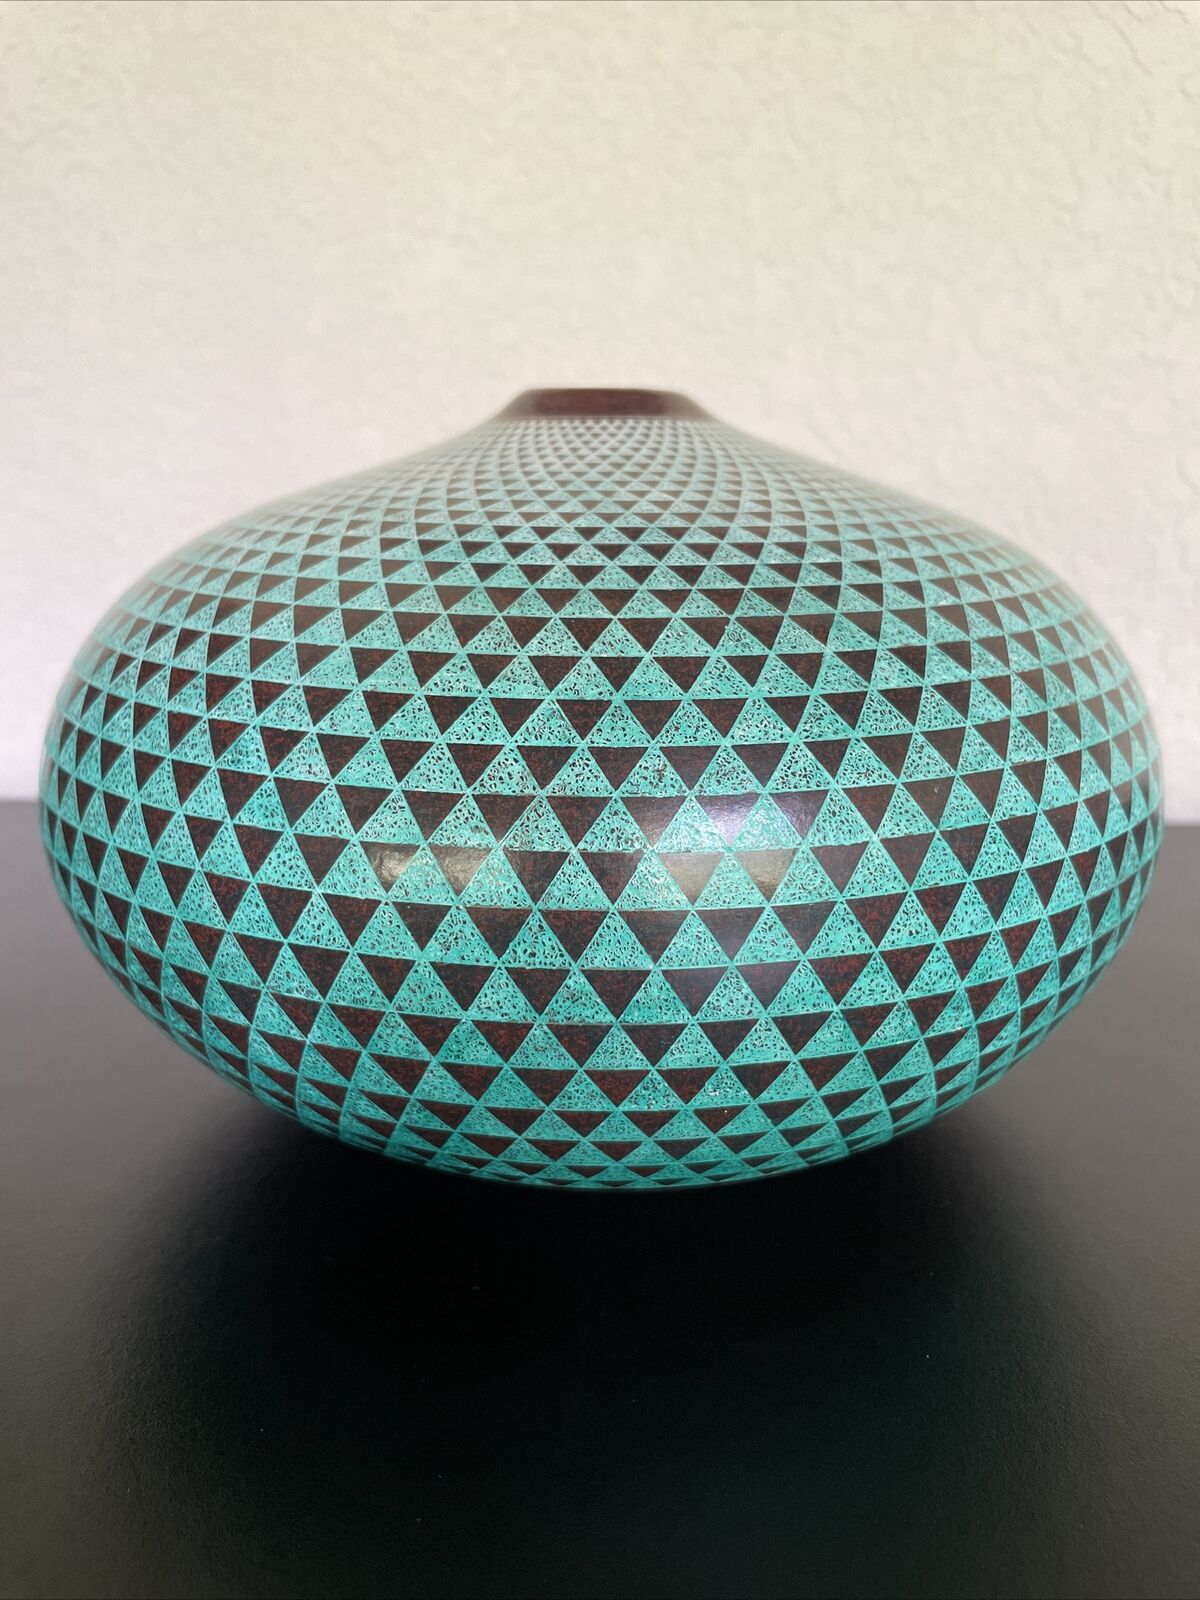 Gutierrez San Juan De Los Platos Ceramic Art Geometric Pot Nicoya Signed